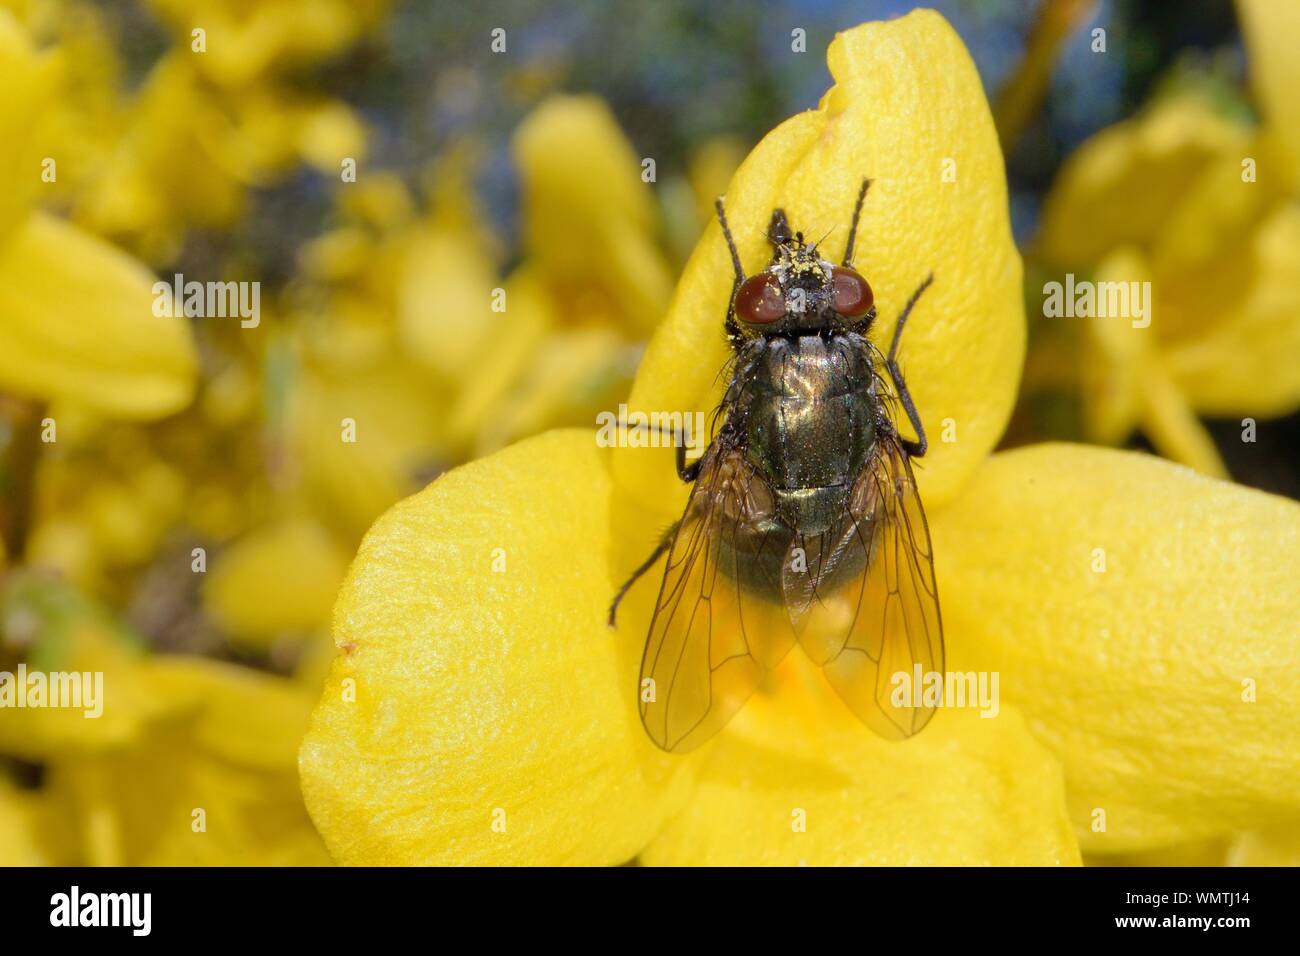 Greenbottle / Muscid fly (Eudasyphora cyanella) feeding on a Forsythia flower, Wiltshire garden, UK, March. Stock Photo